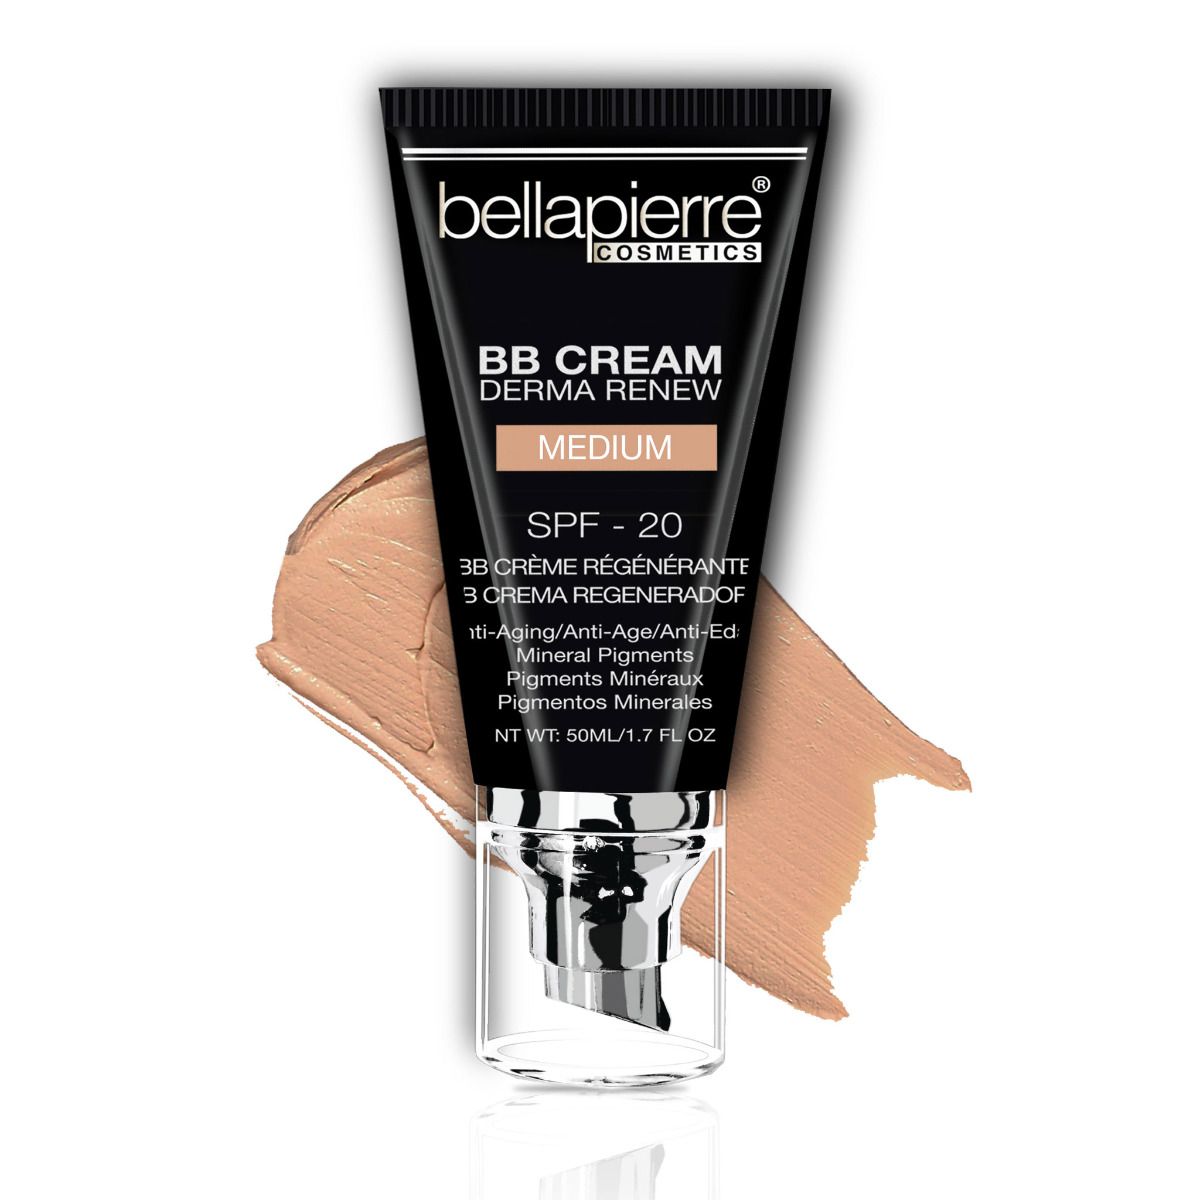 Bellapierre Cosmetics - Derma Renew BB Cream